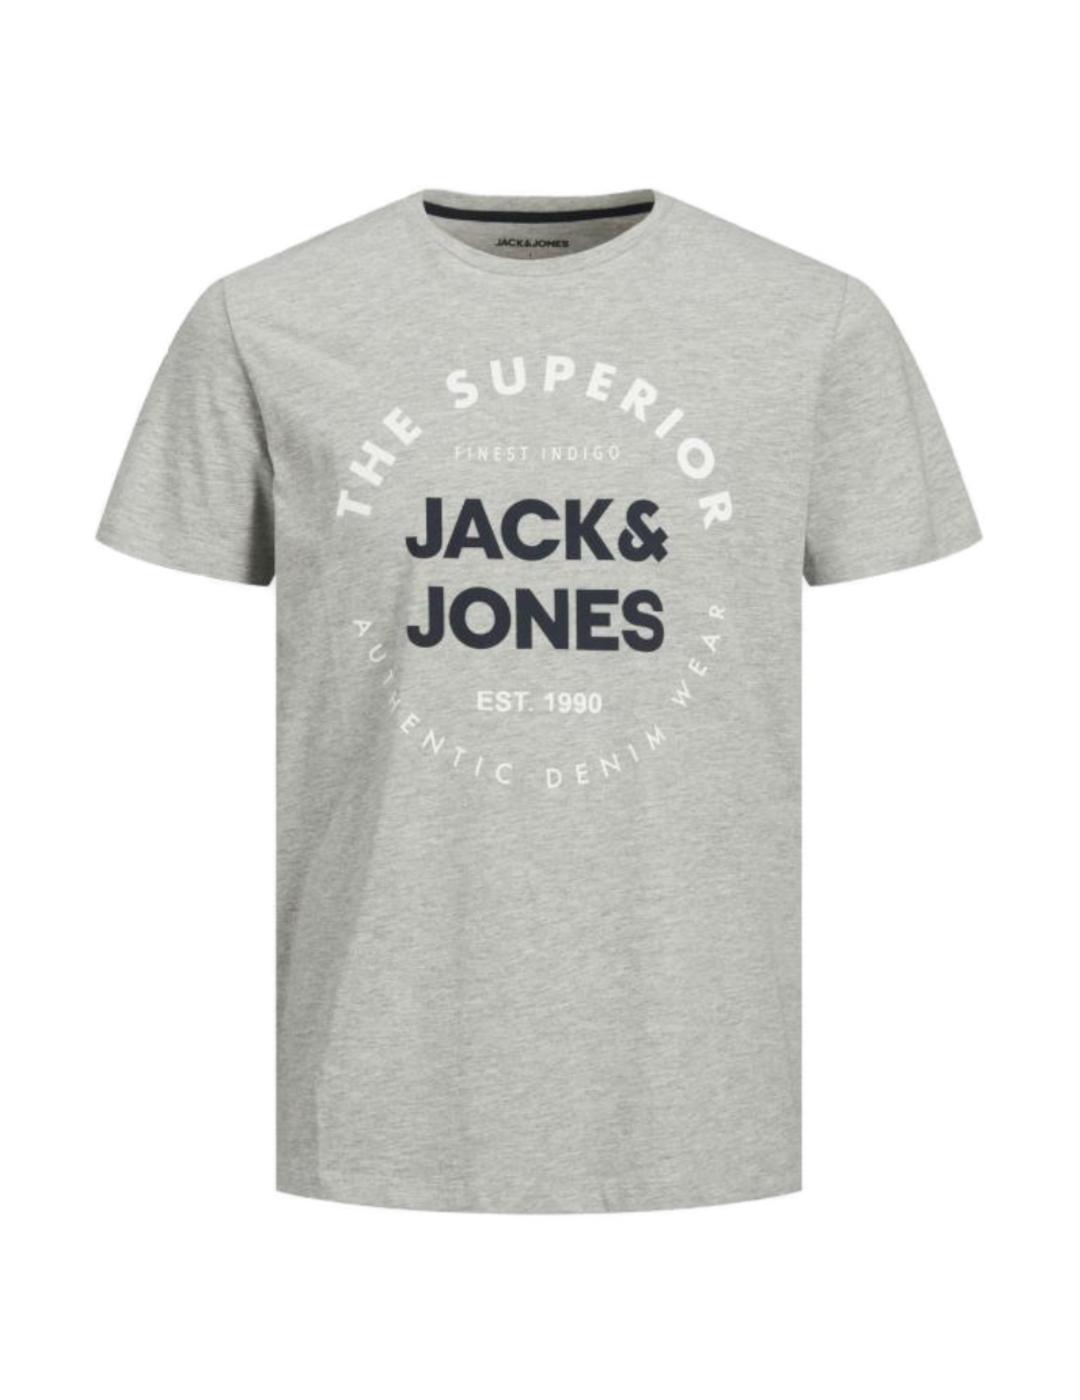 Camiseta Jack-Jones Herro gris claro para hombre-z